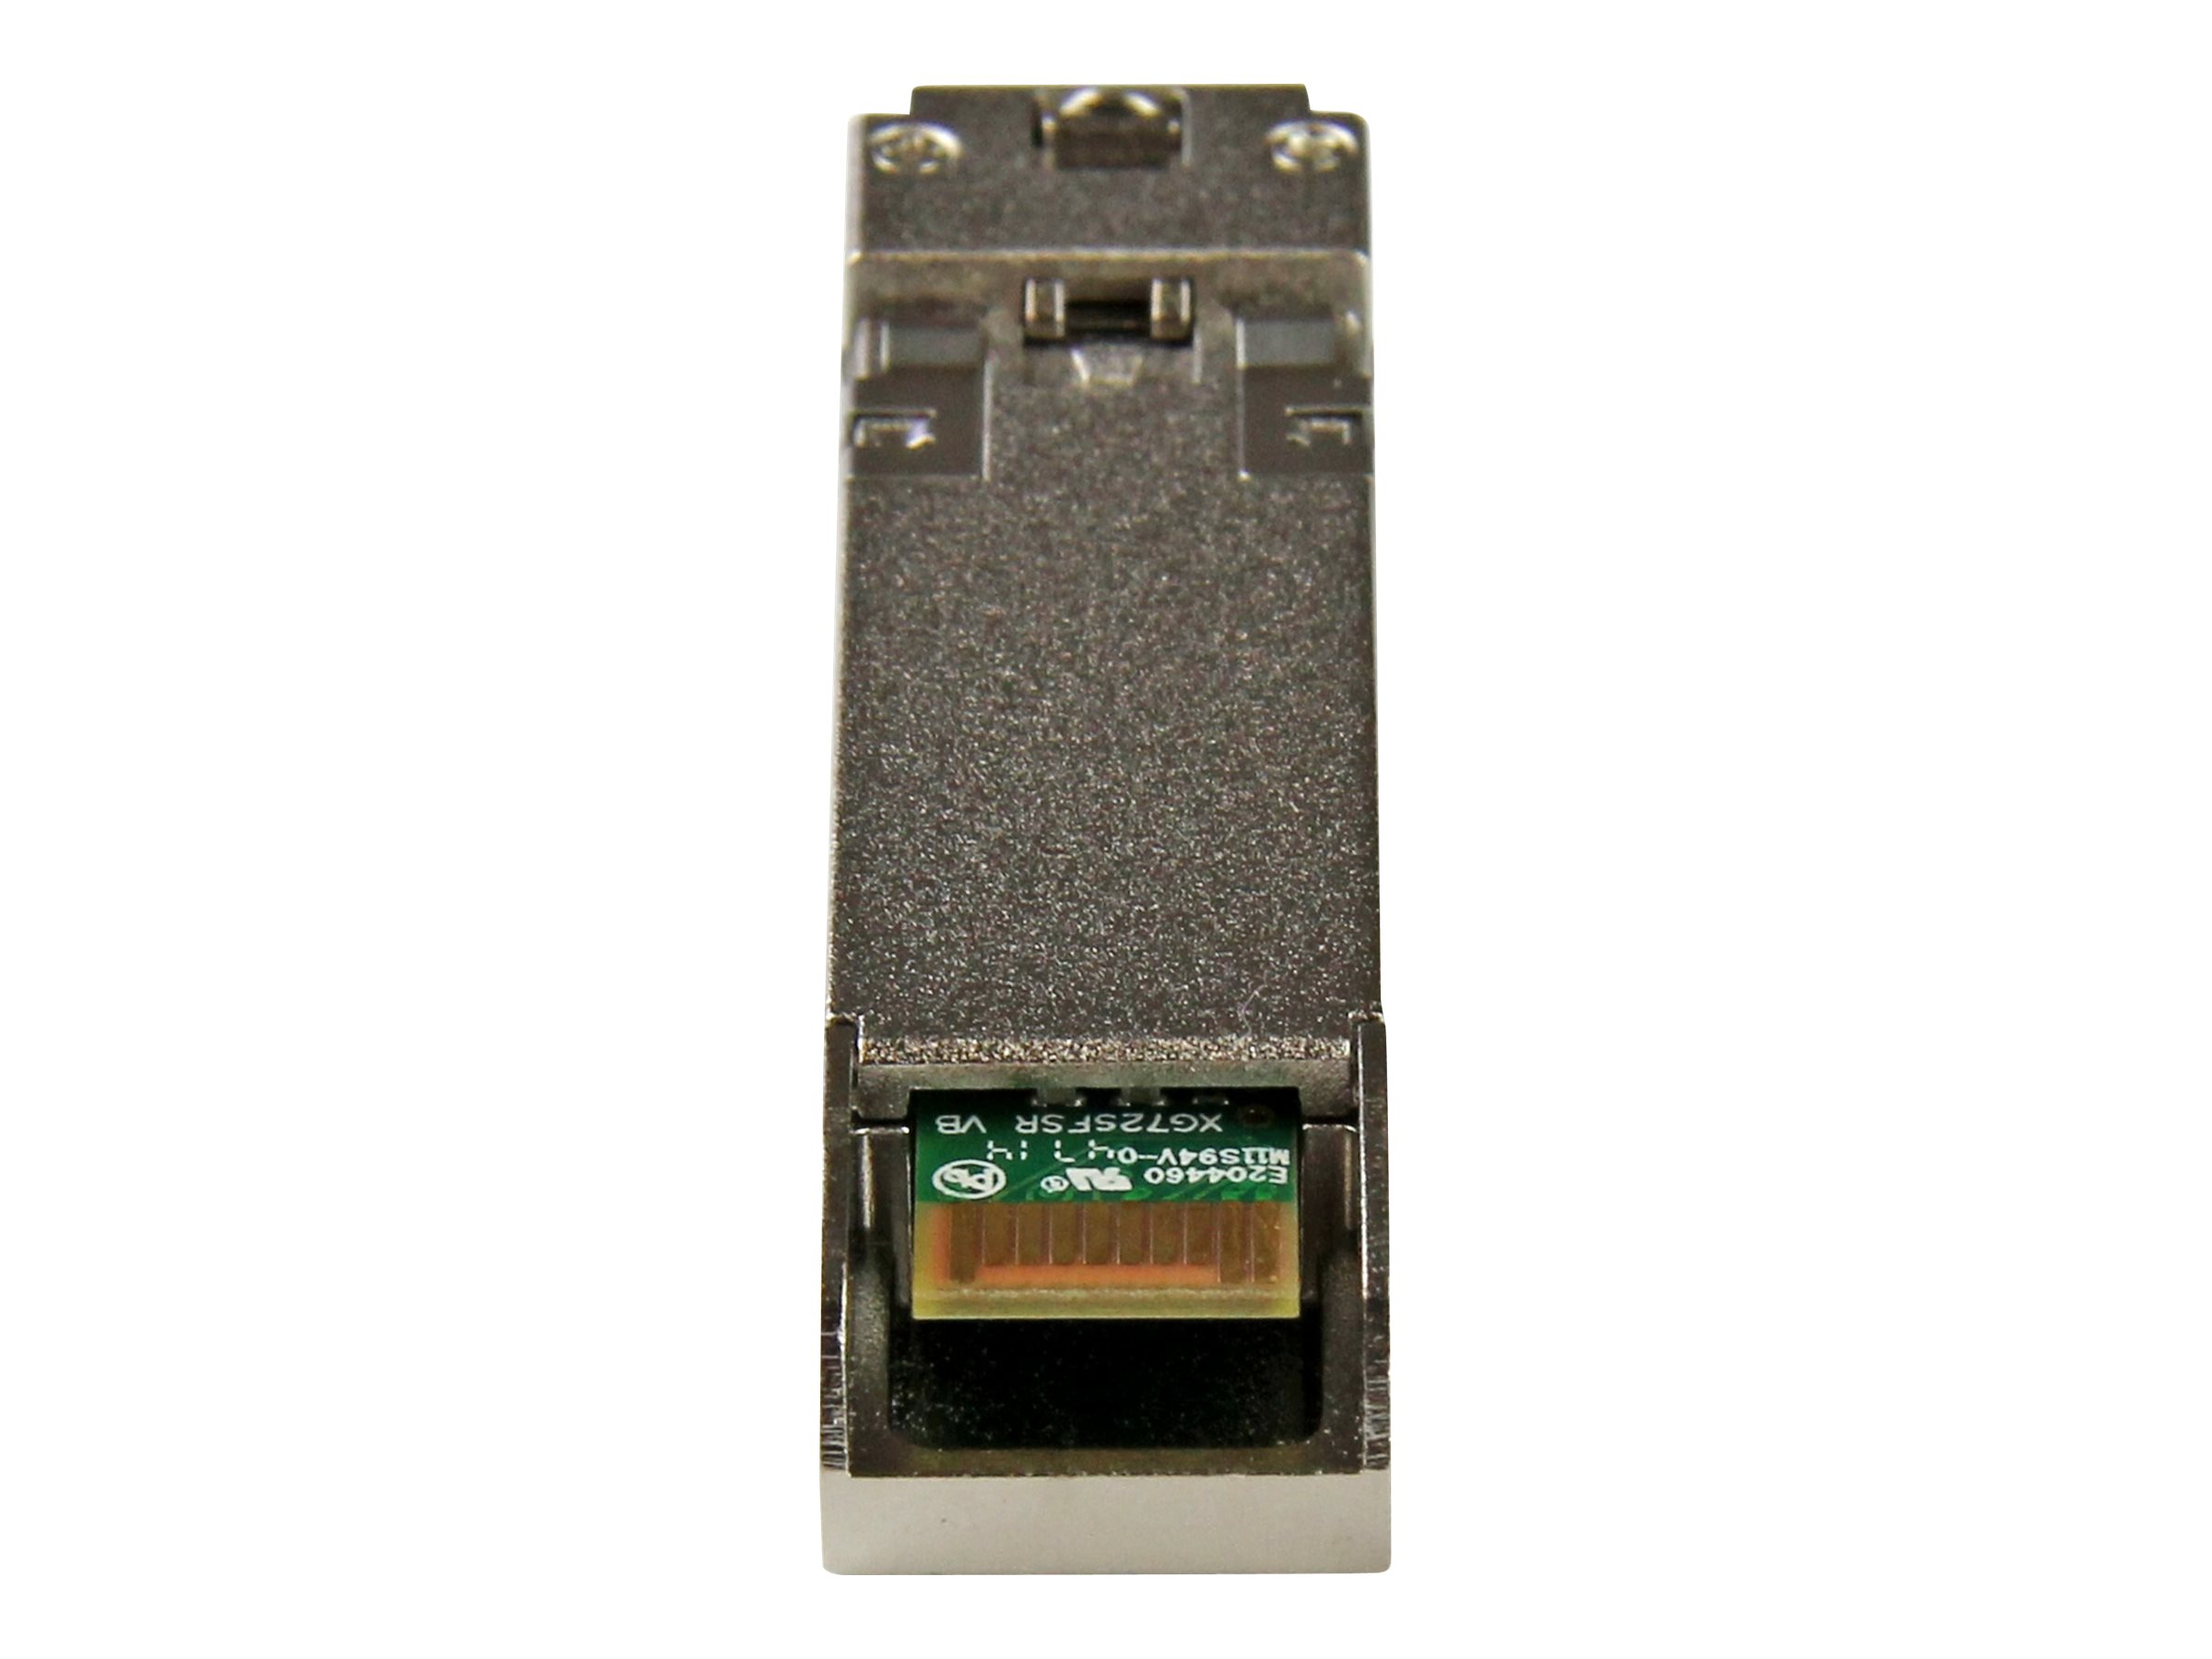 StarTech.com SFP fibre - 10GBase-SR - Module SFP+ fibre optique - 10 Gb - Compatible Cisco Meraki MA-SFP-10GB-SR - Multimode LC - 300 m - Module transmetteur SFP+ (équivalent à : Cisco Meraki MA-SFP-10GB-SR) - 10GbE - 10GBase-SR - LC multi-mode - jusqu'à 300 m - 850 nm - MASFP10GBSR - Transmetteurs optiques